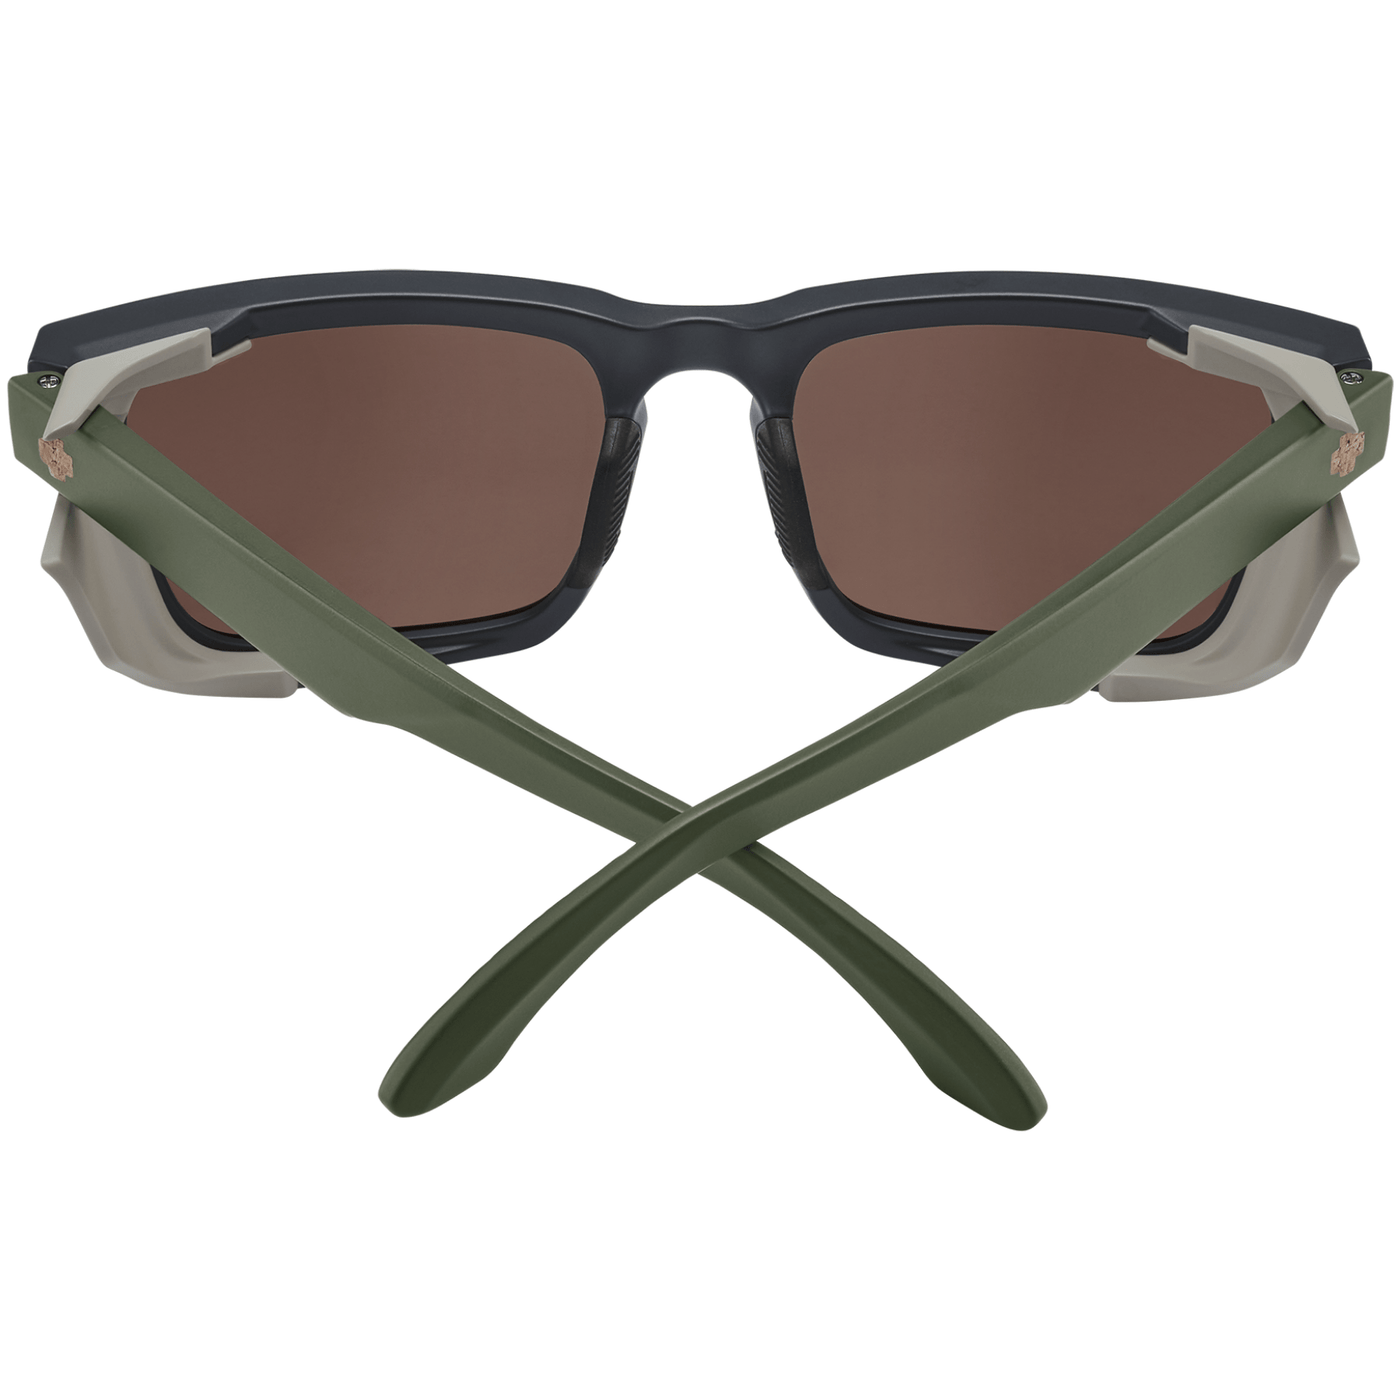 Square-framed sunglasses - olive